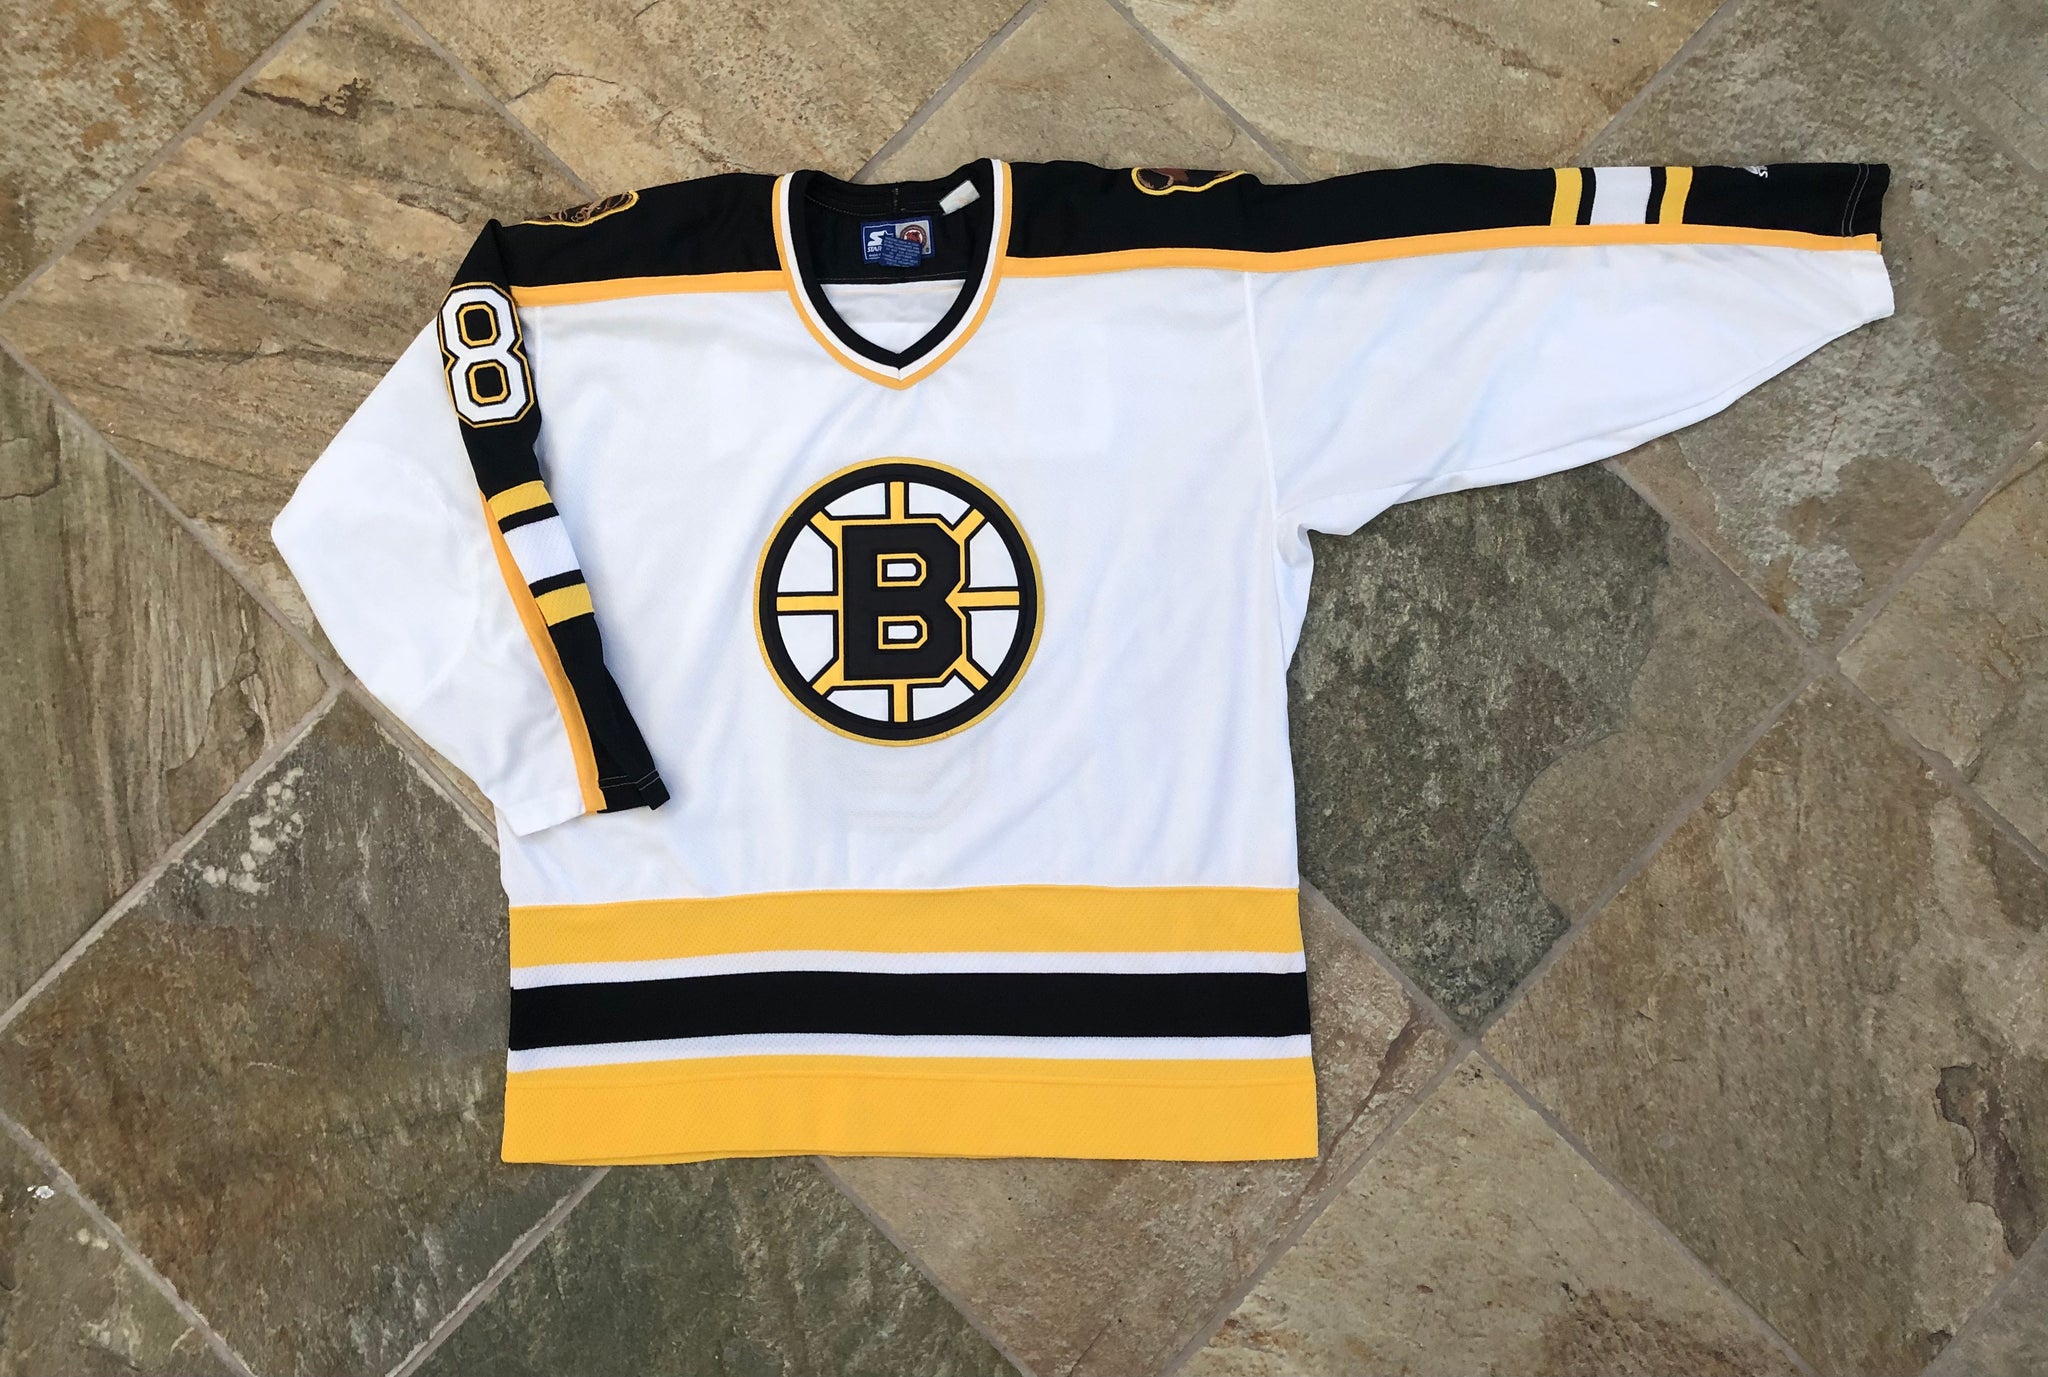 Vintage Starter Boston Bruins #4 NHL Hockey Jersey Black Yellow Size Medium